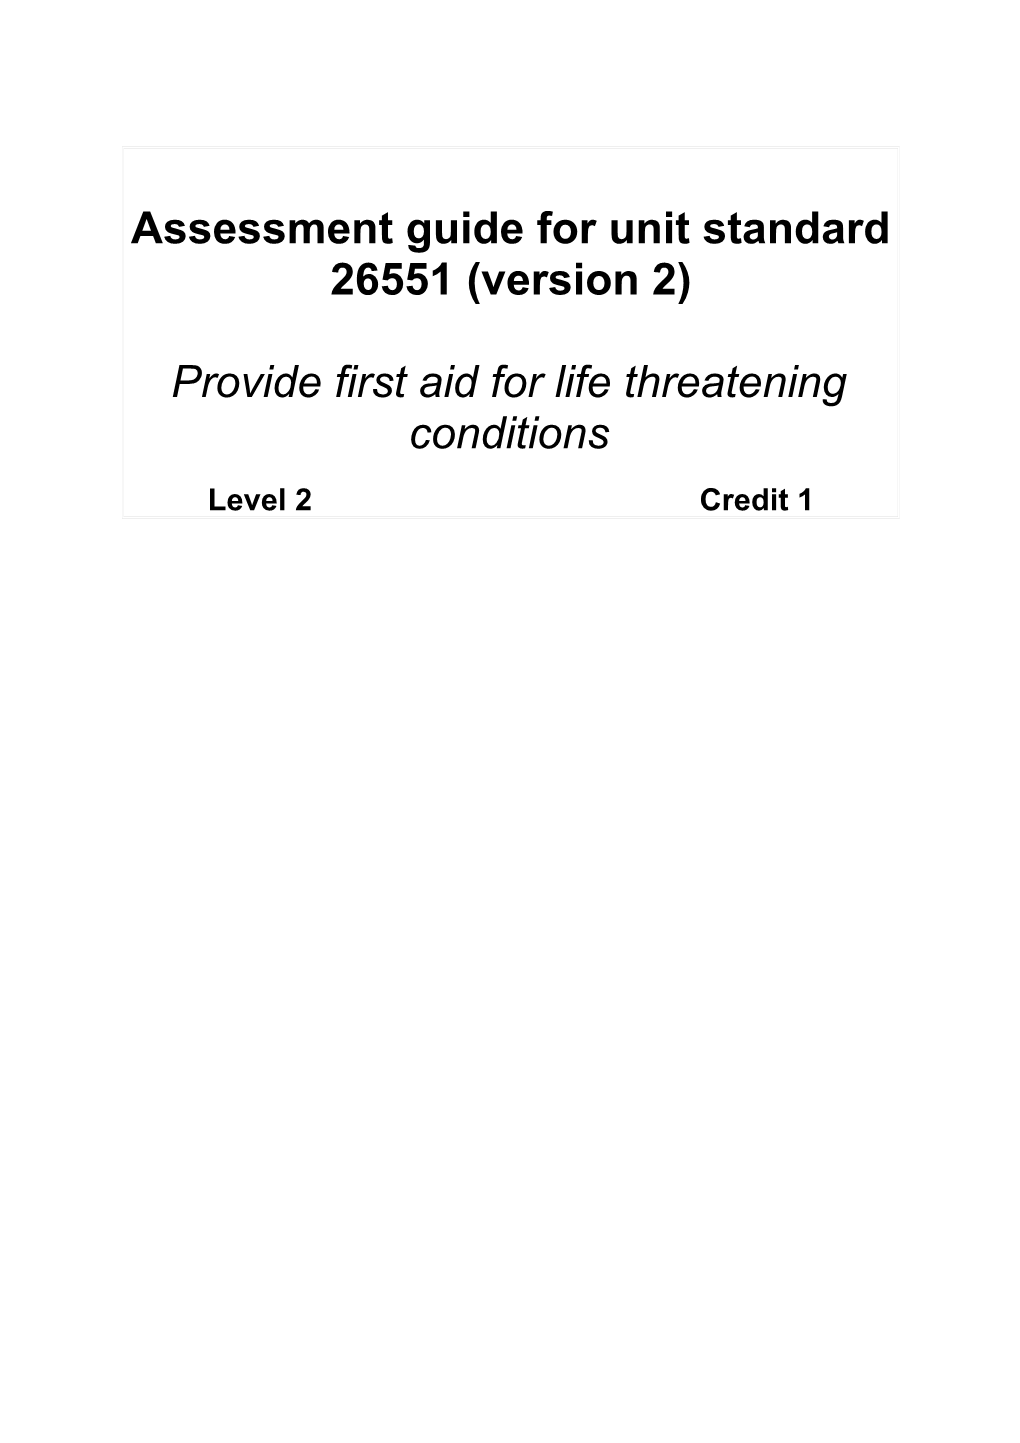 Assessment Guide for Unit Standard 26551 (Version 1)